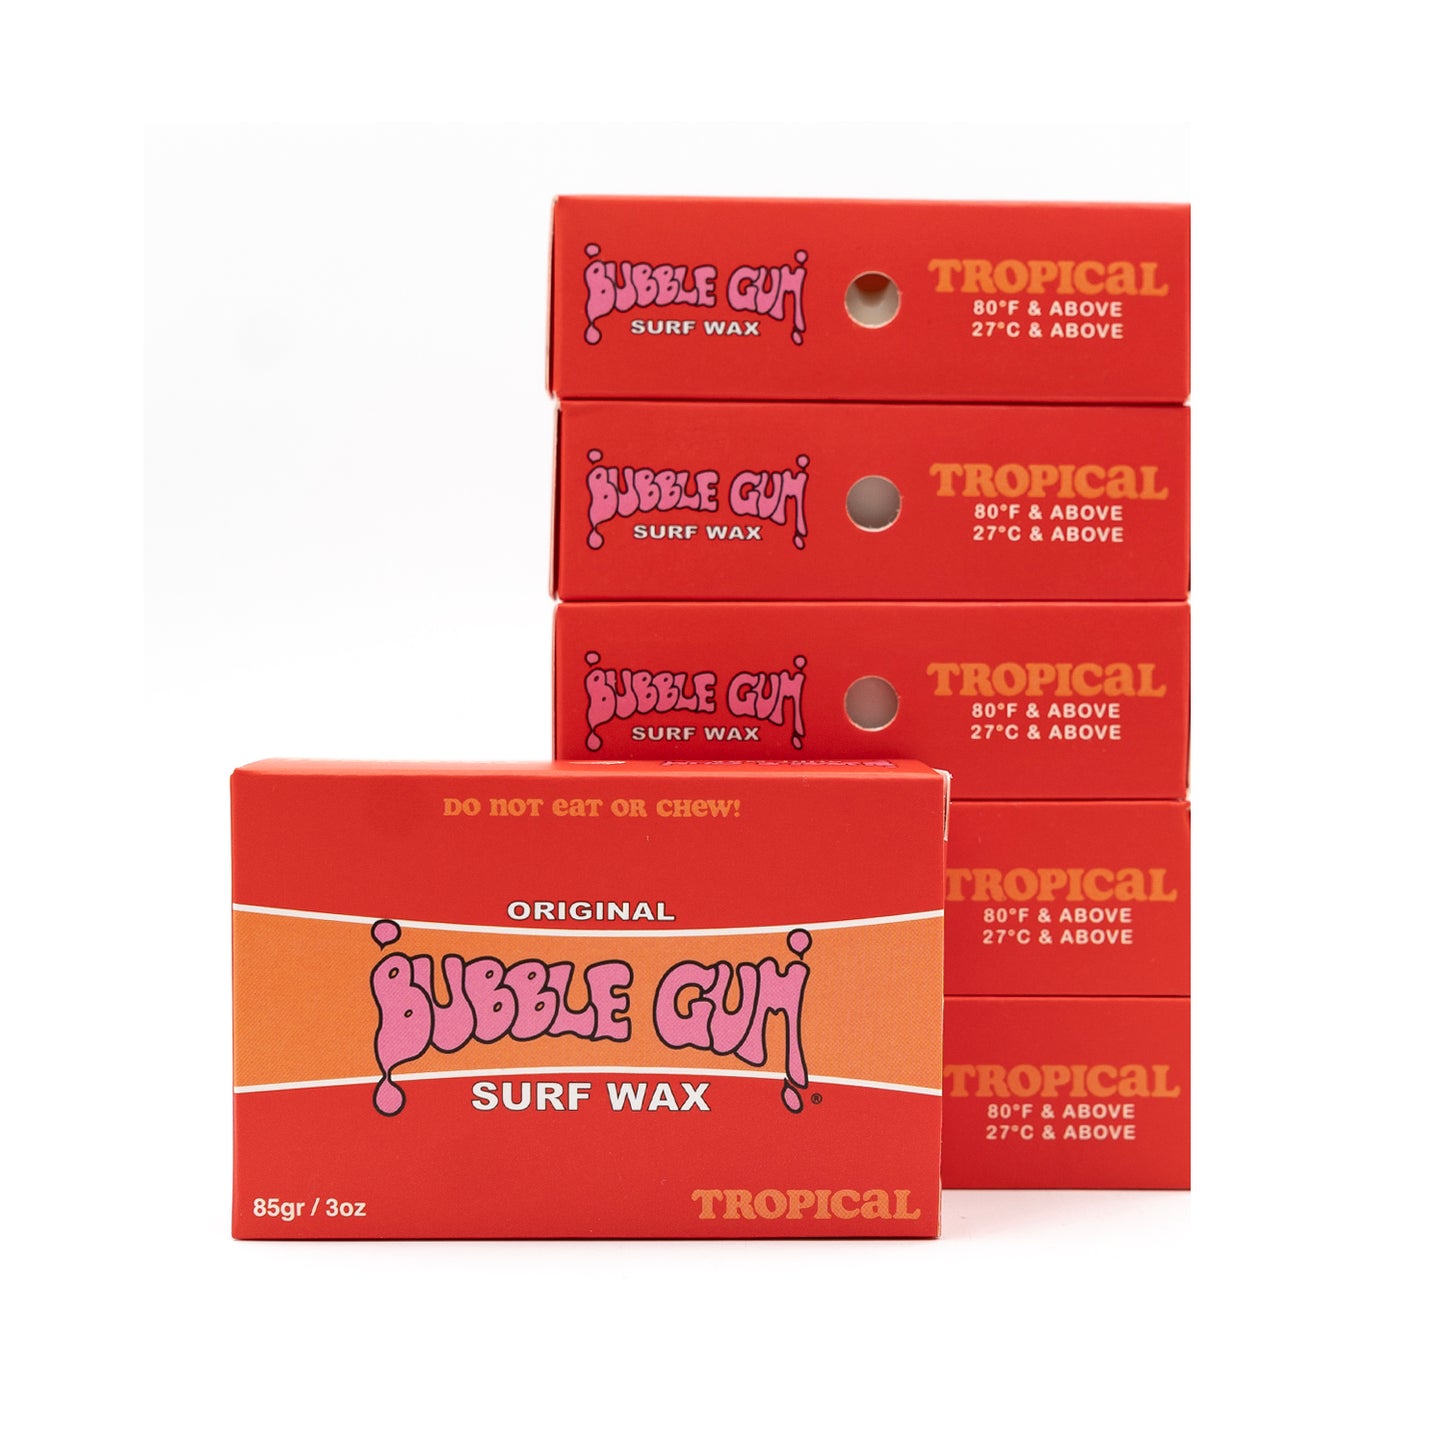 Bubble Gum "Original Formula" Surf Wax Box - Tropical - 80° & Above - 6 Pack